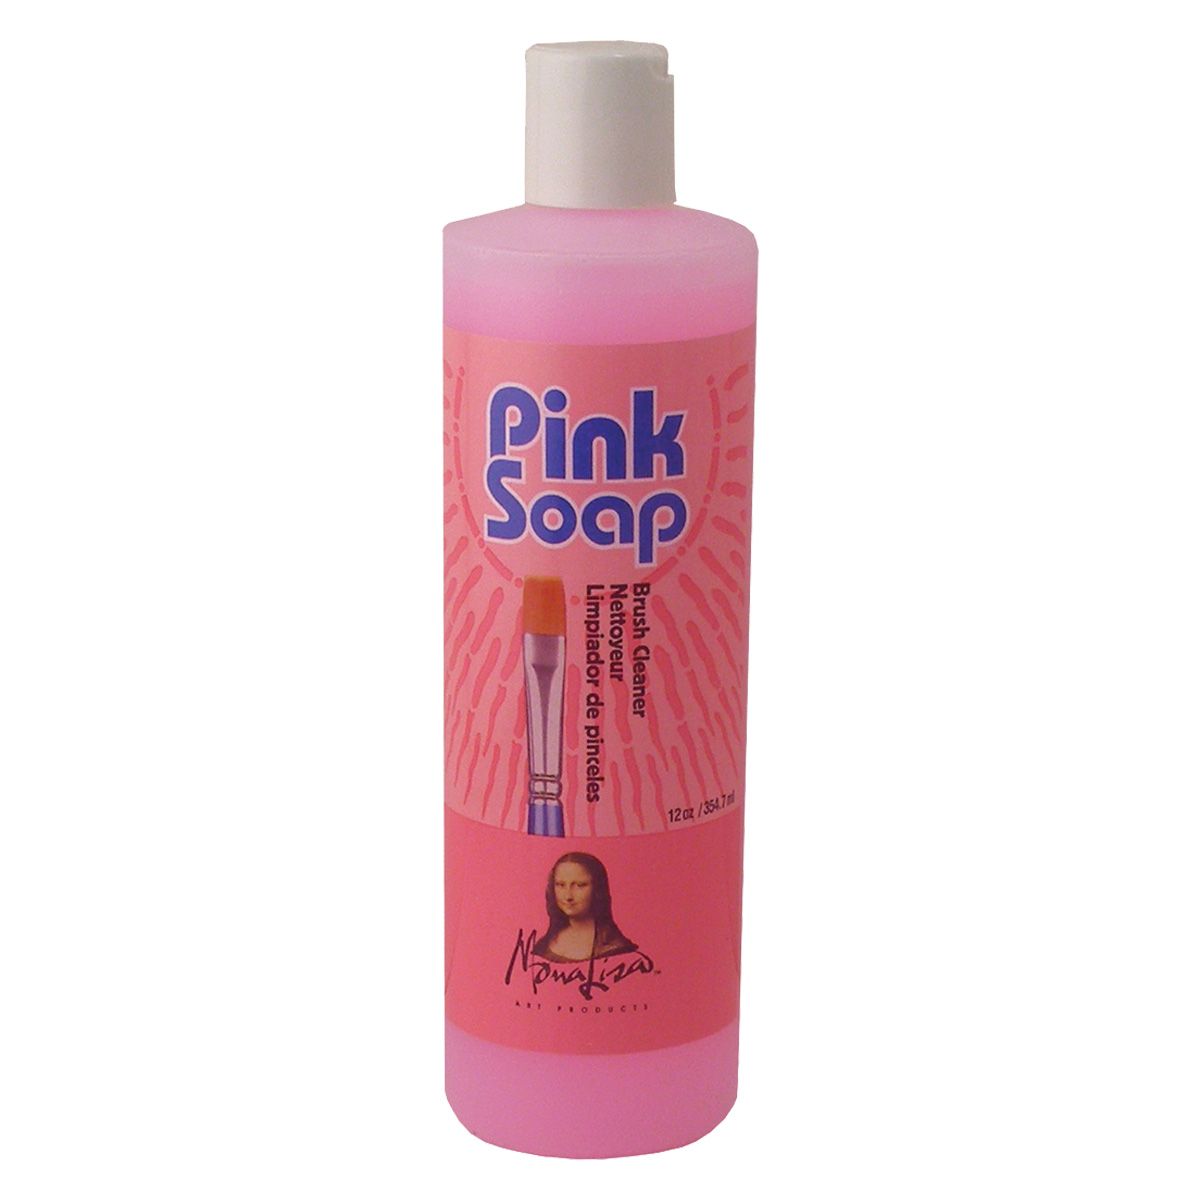 Mona Lisa Pink Soap, 12oz Bottle